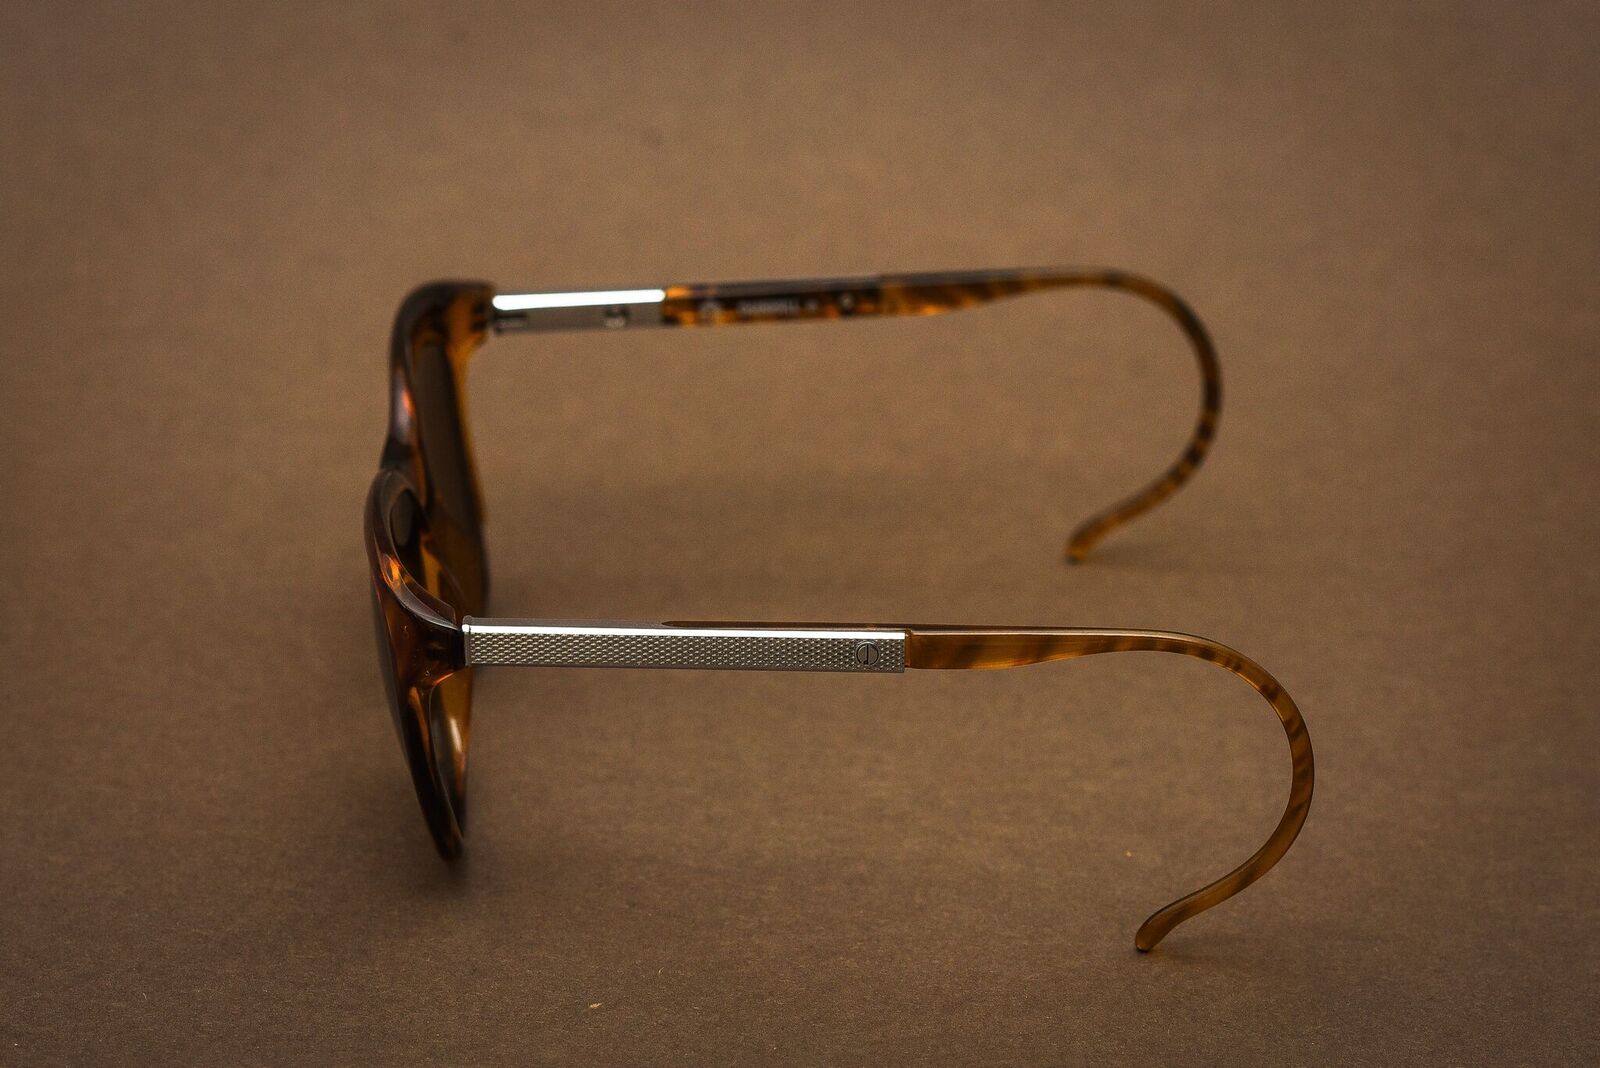 Dunhill 6006 sunglasses